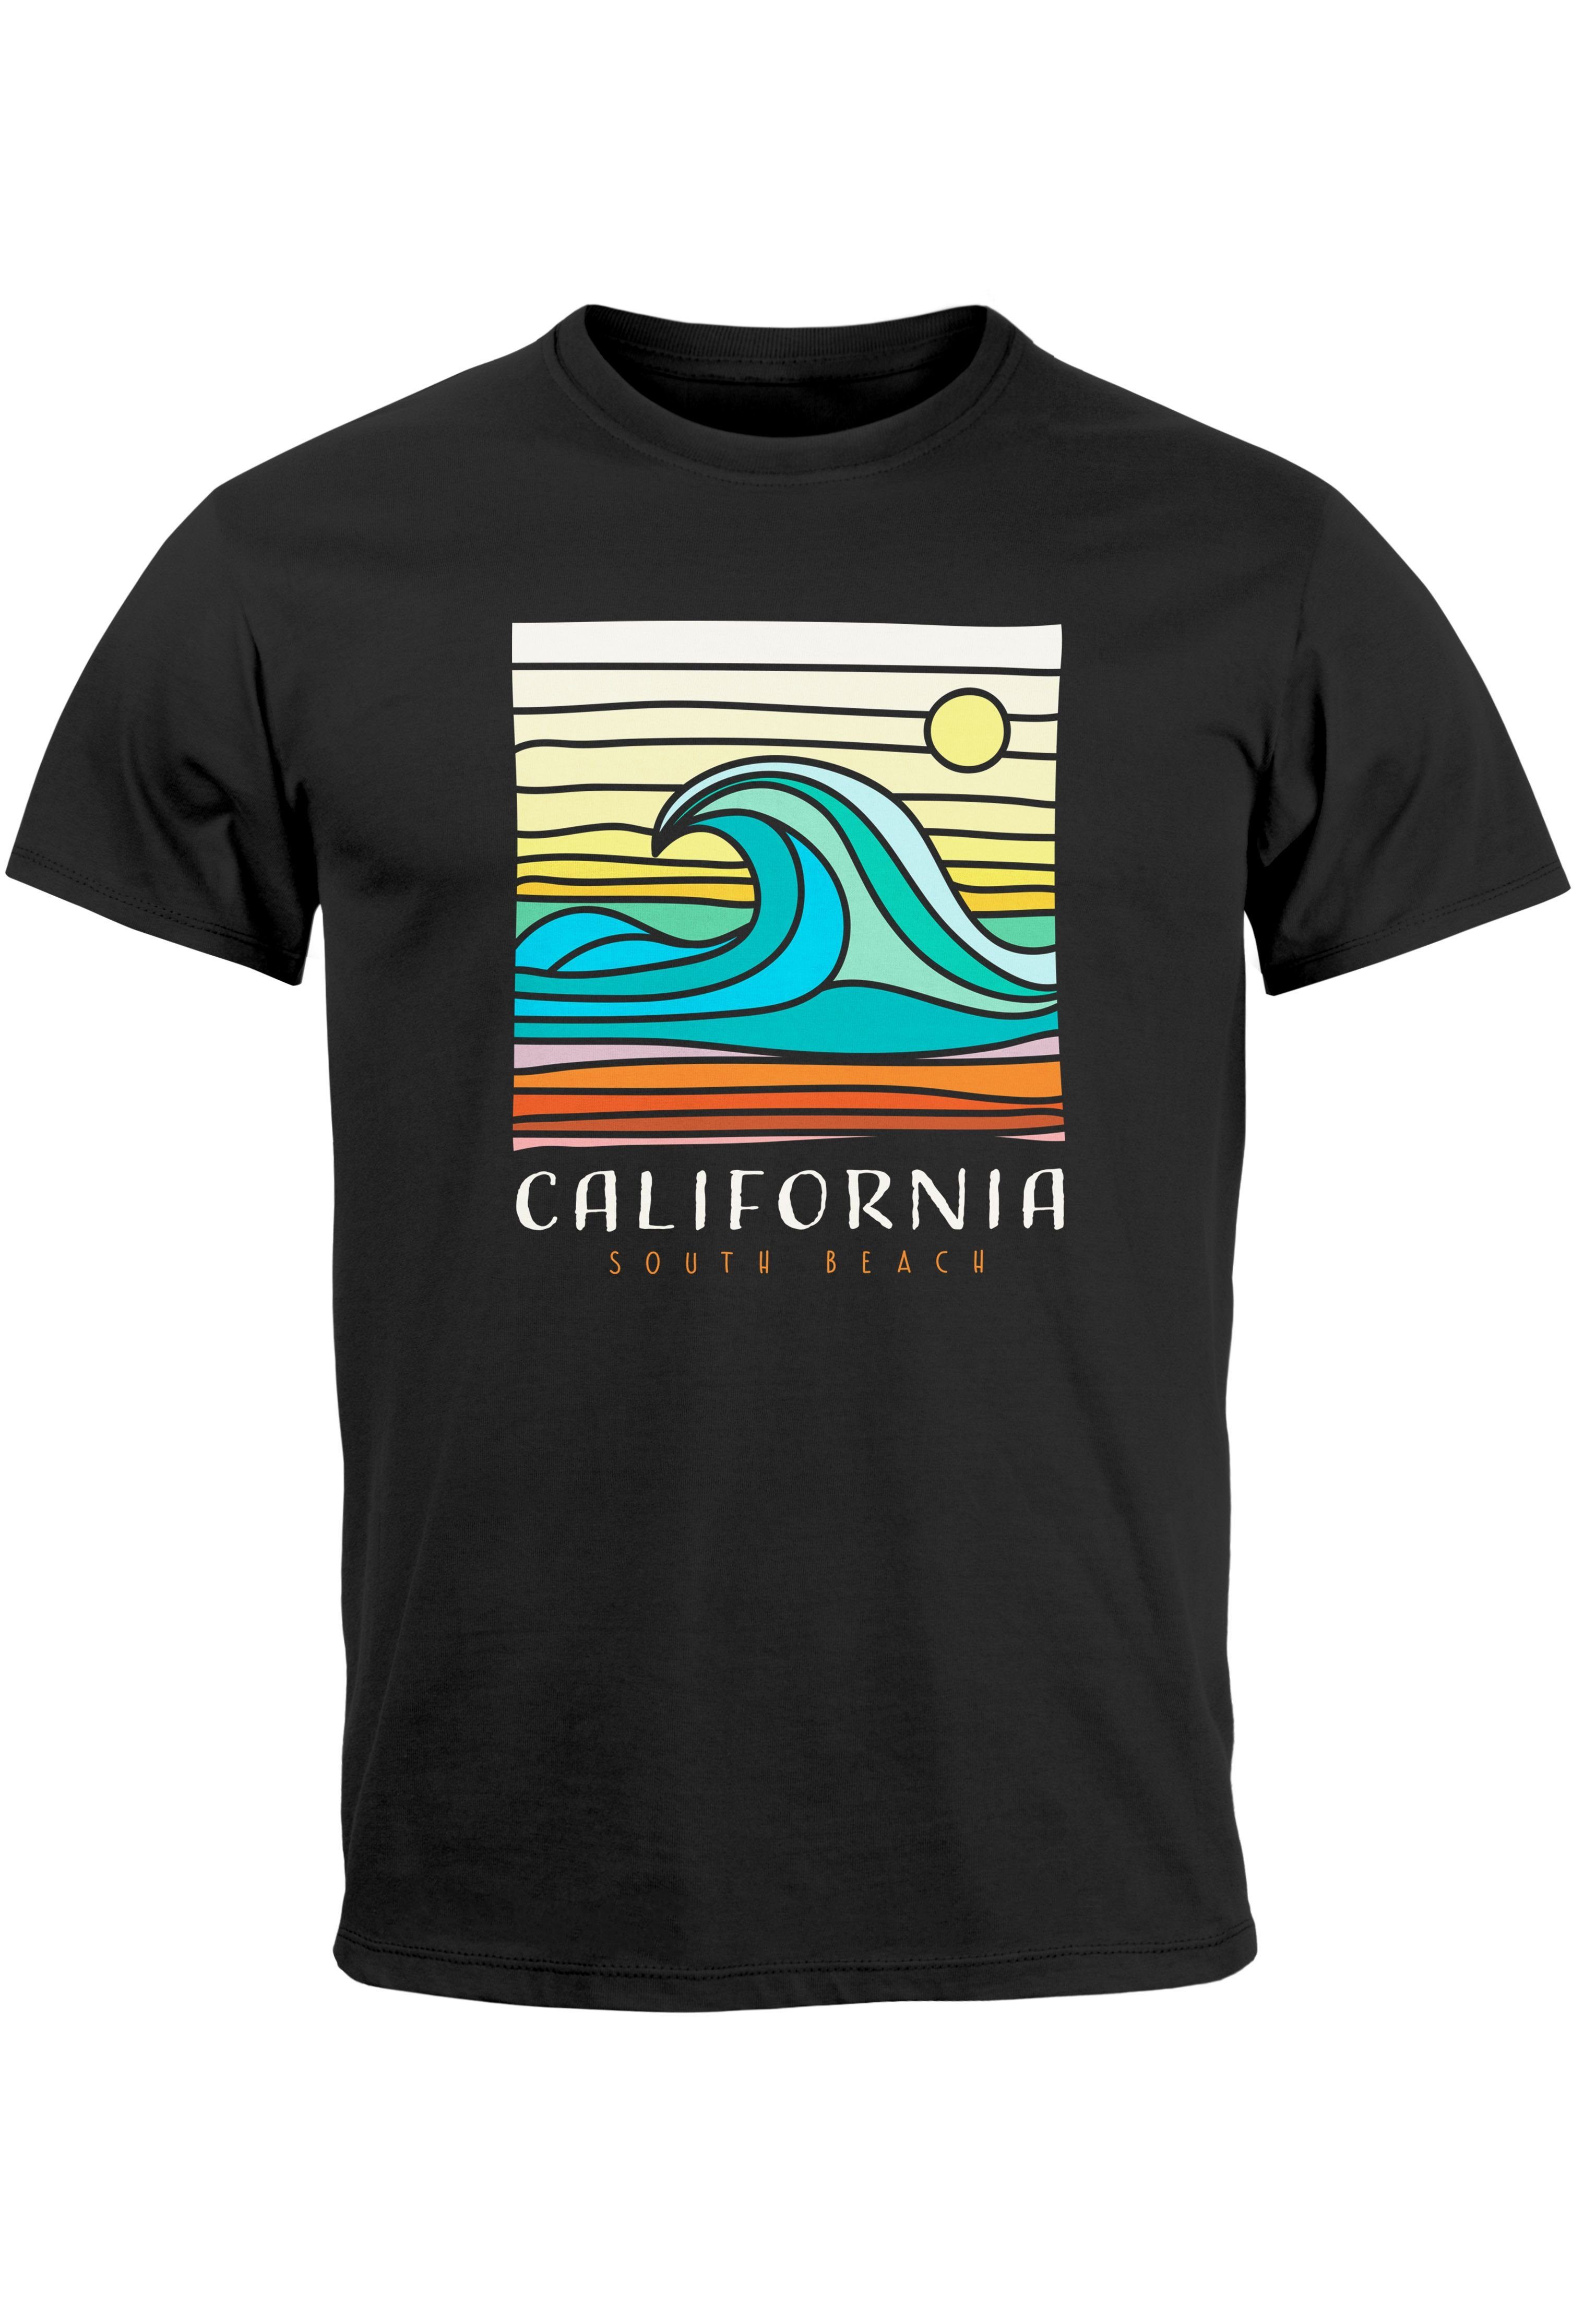 Print Herren Neverless South Welle schwarz Print-Shirt mit Wave T-Shirt Aufdruc Print Beach Surfing California